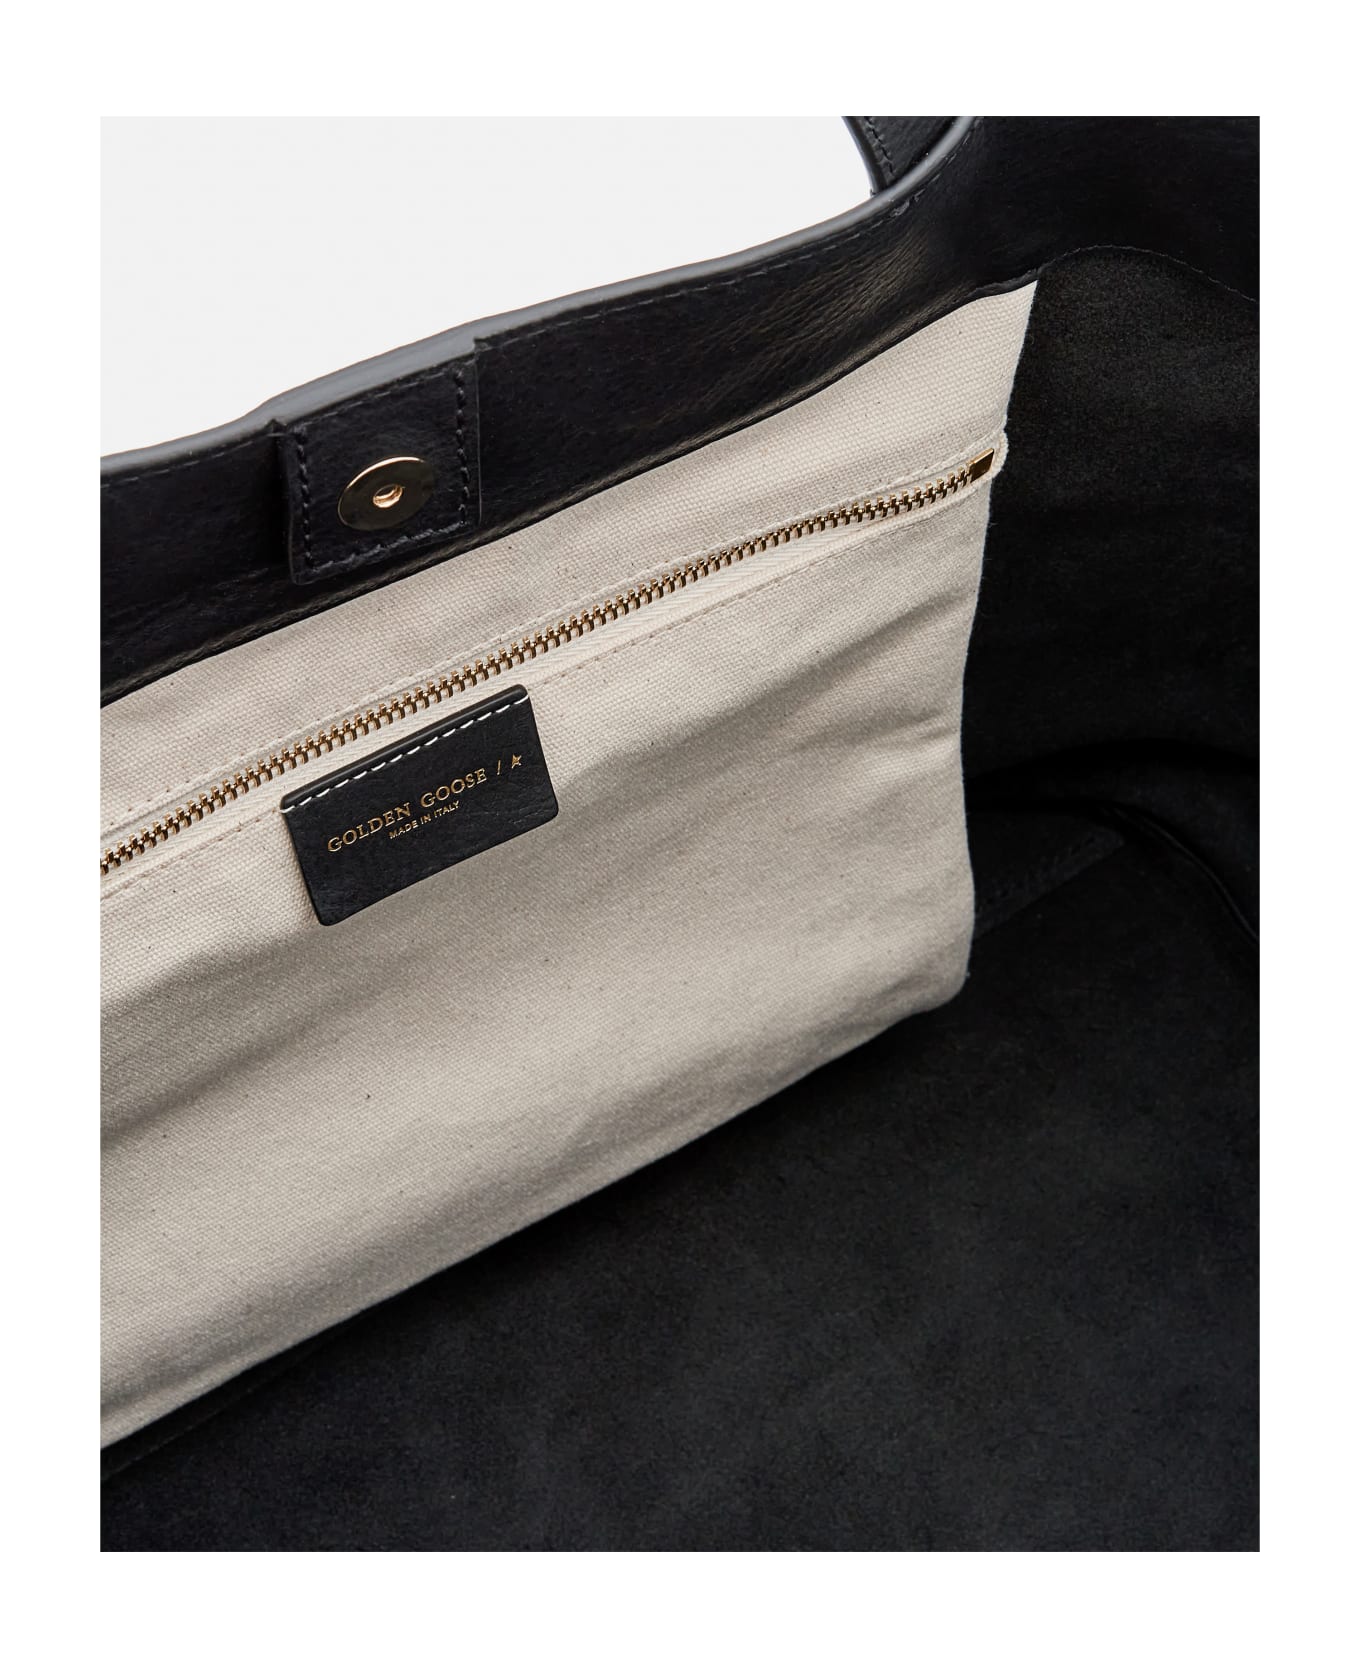 Golden Goose Pasadena Leather Shopping Bag - Black